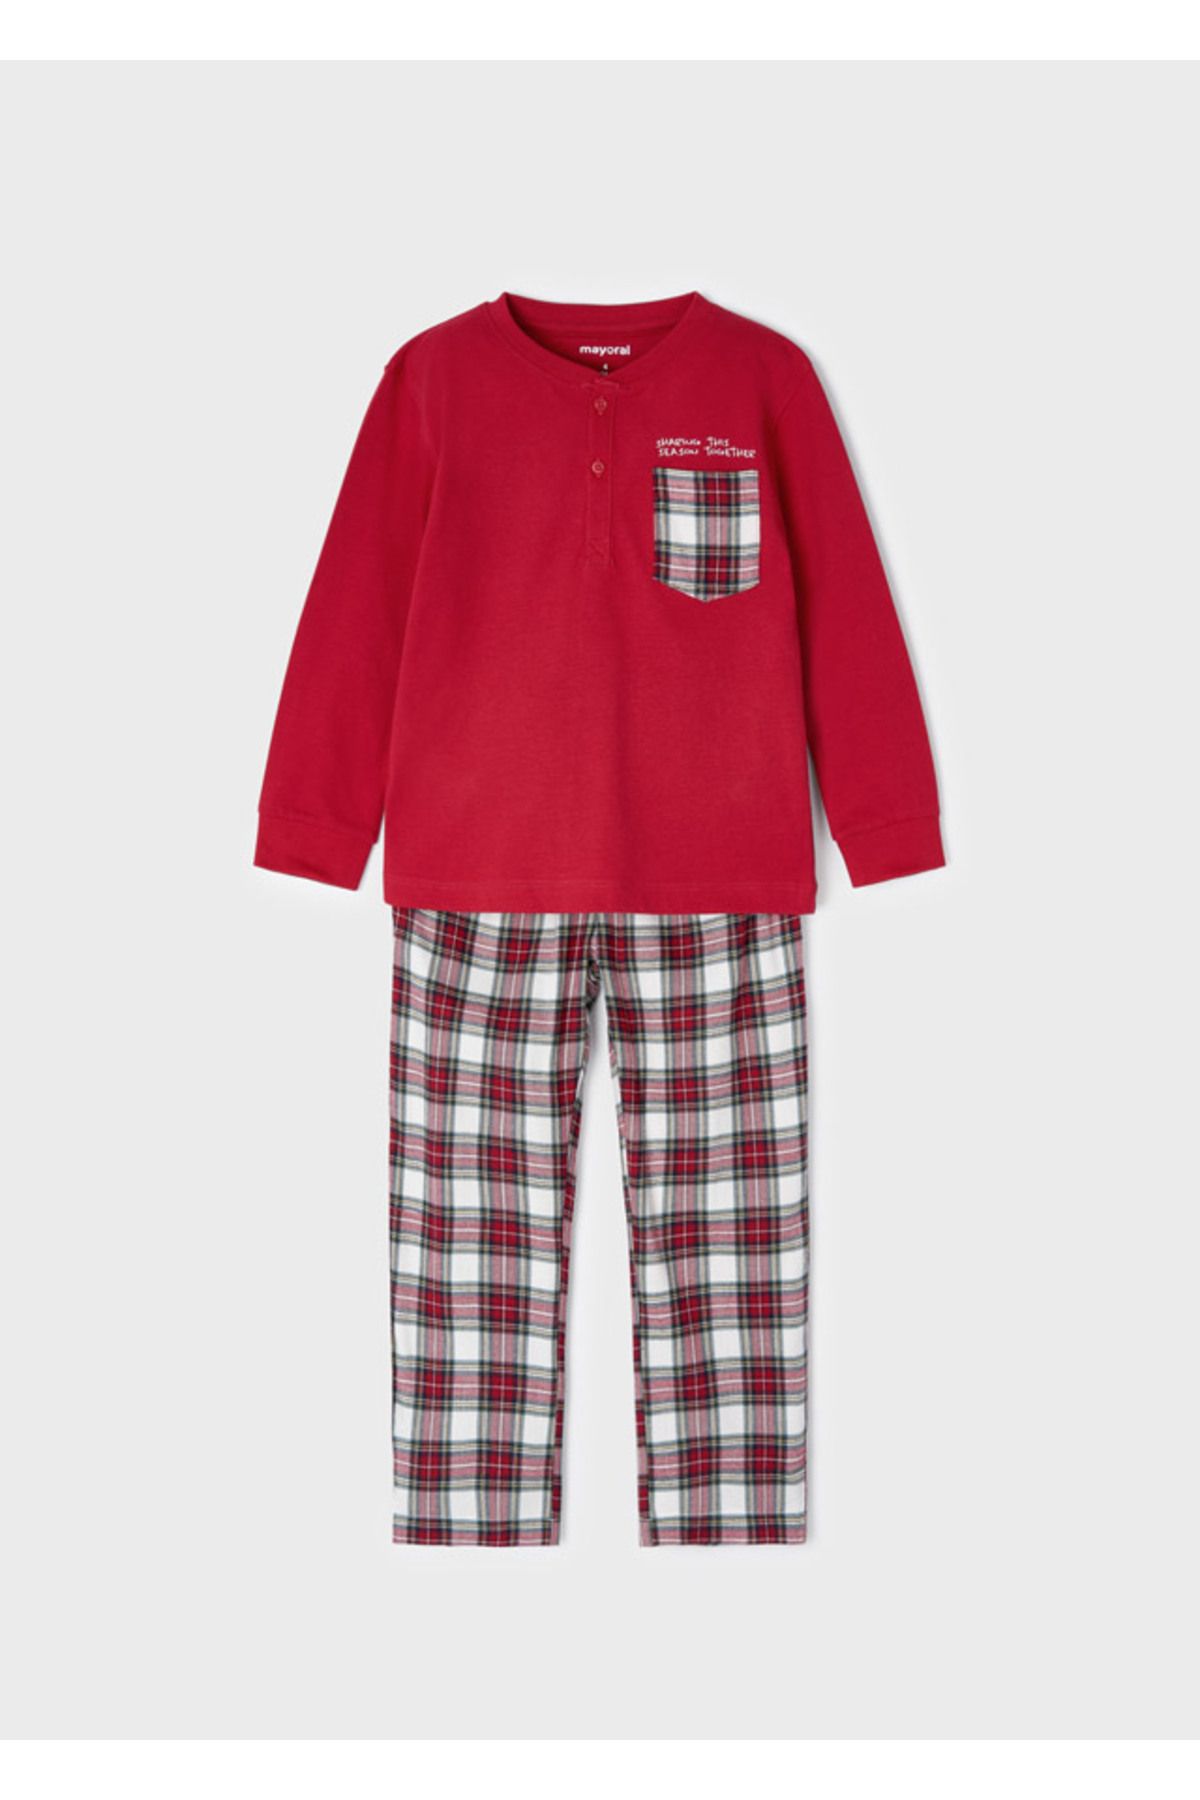 Mayoral Erkek Çocuk Pijama Takım 4754